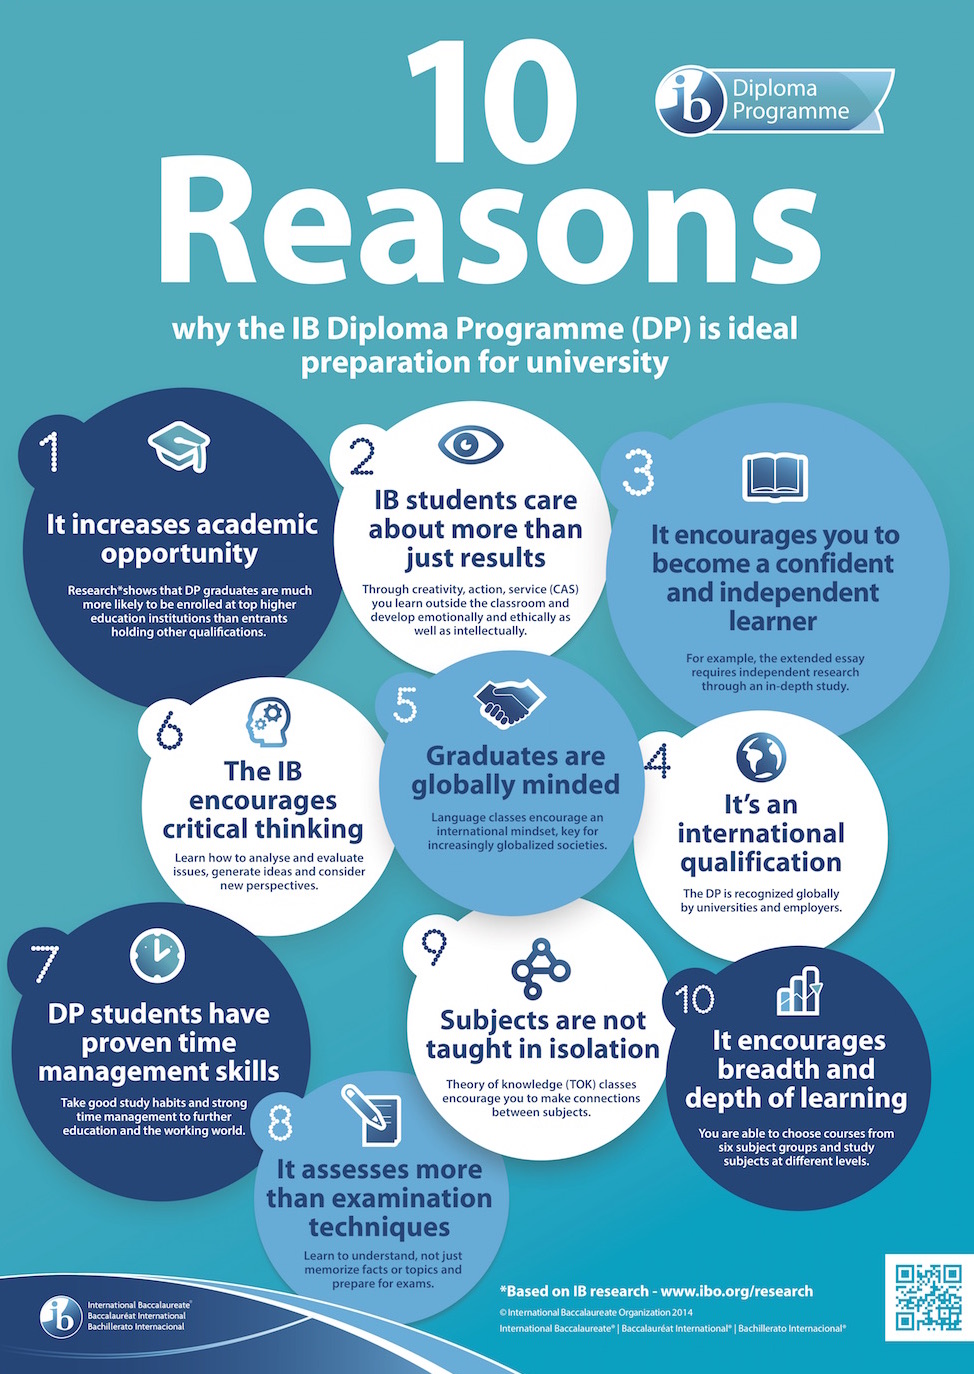 Ten reasons to choose the IB Diploma programme, IBDP